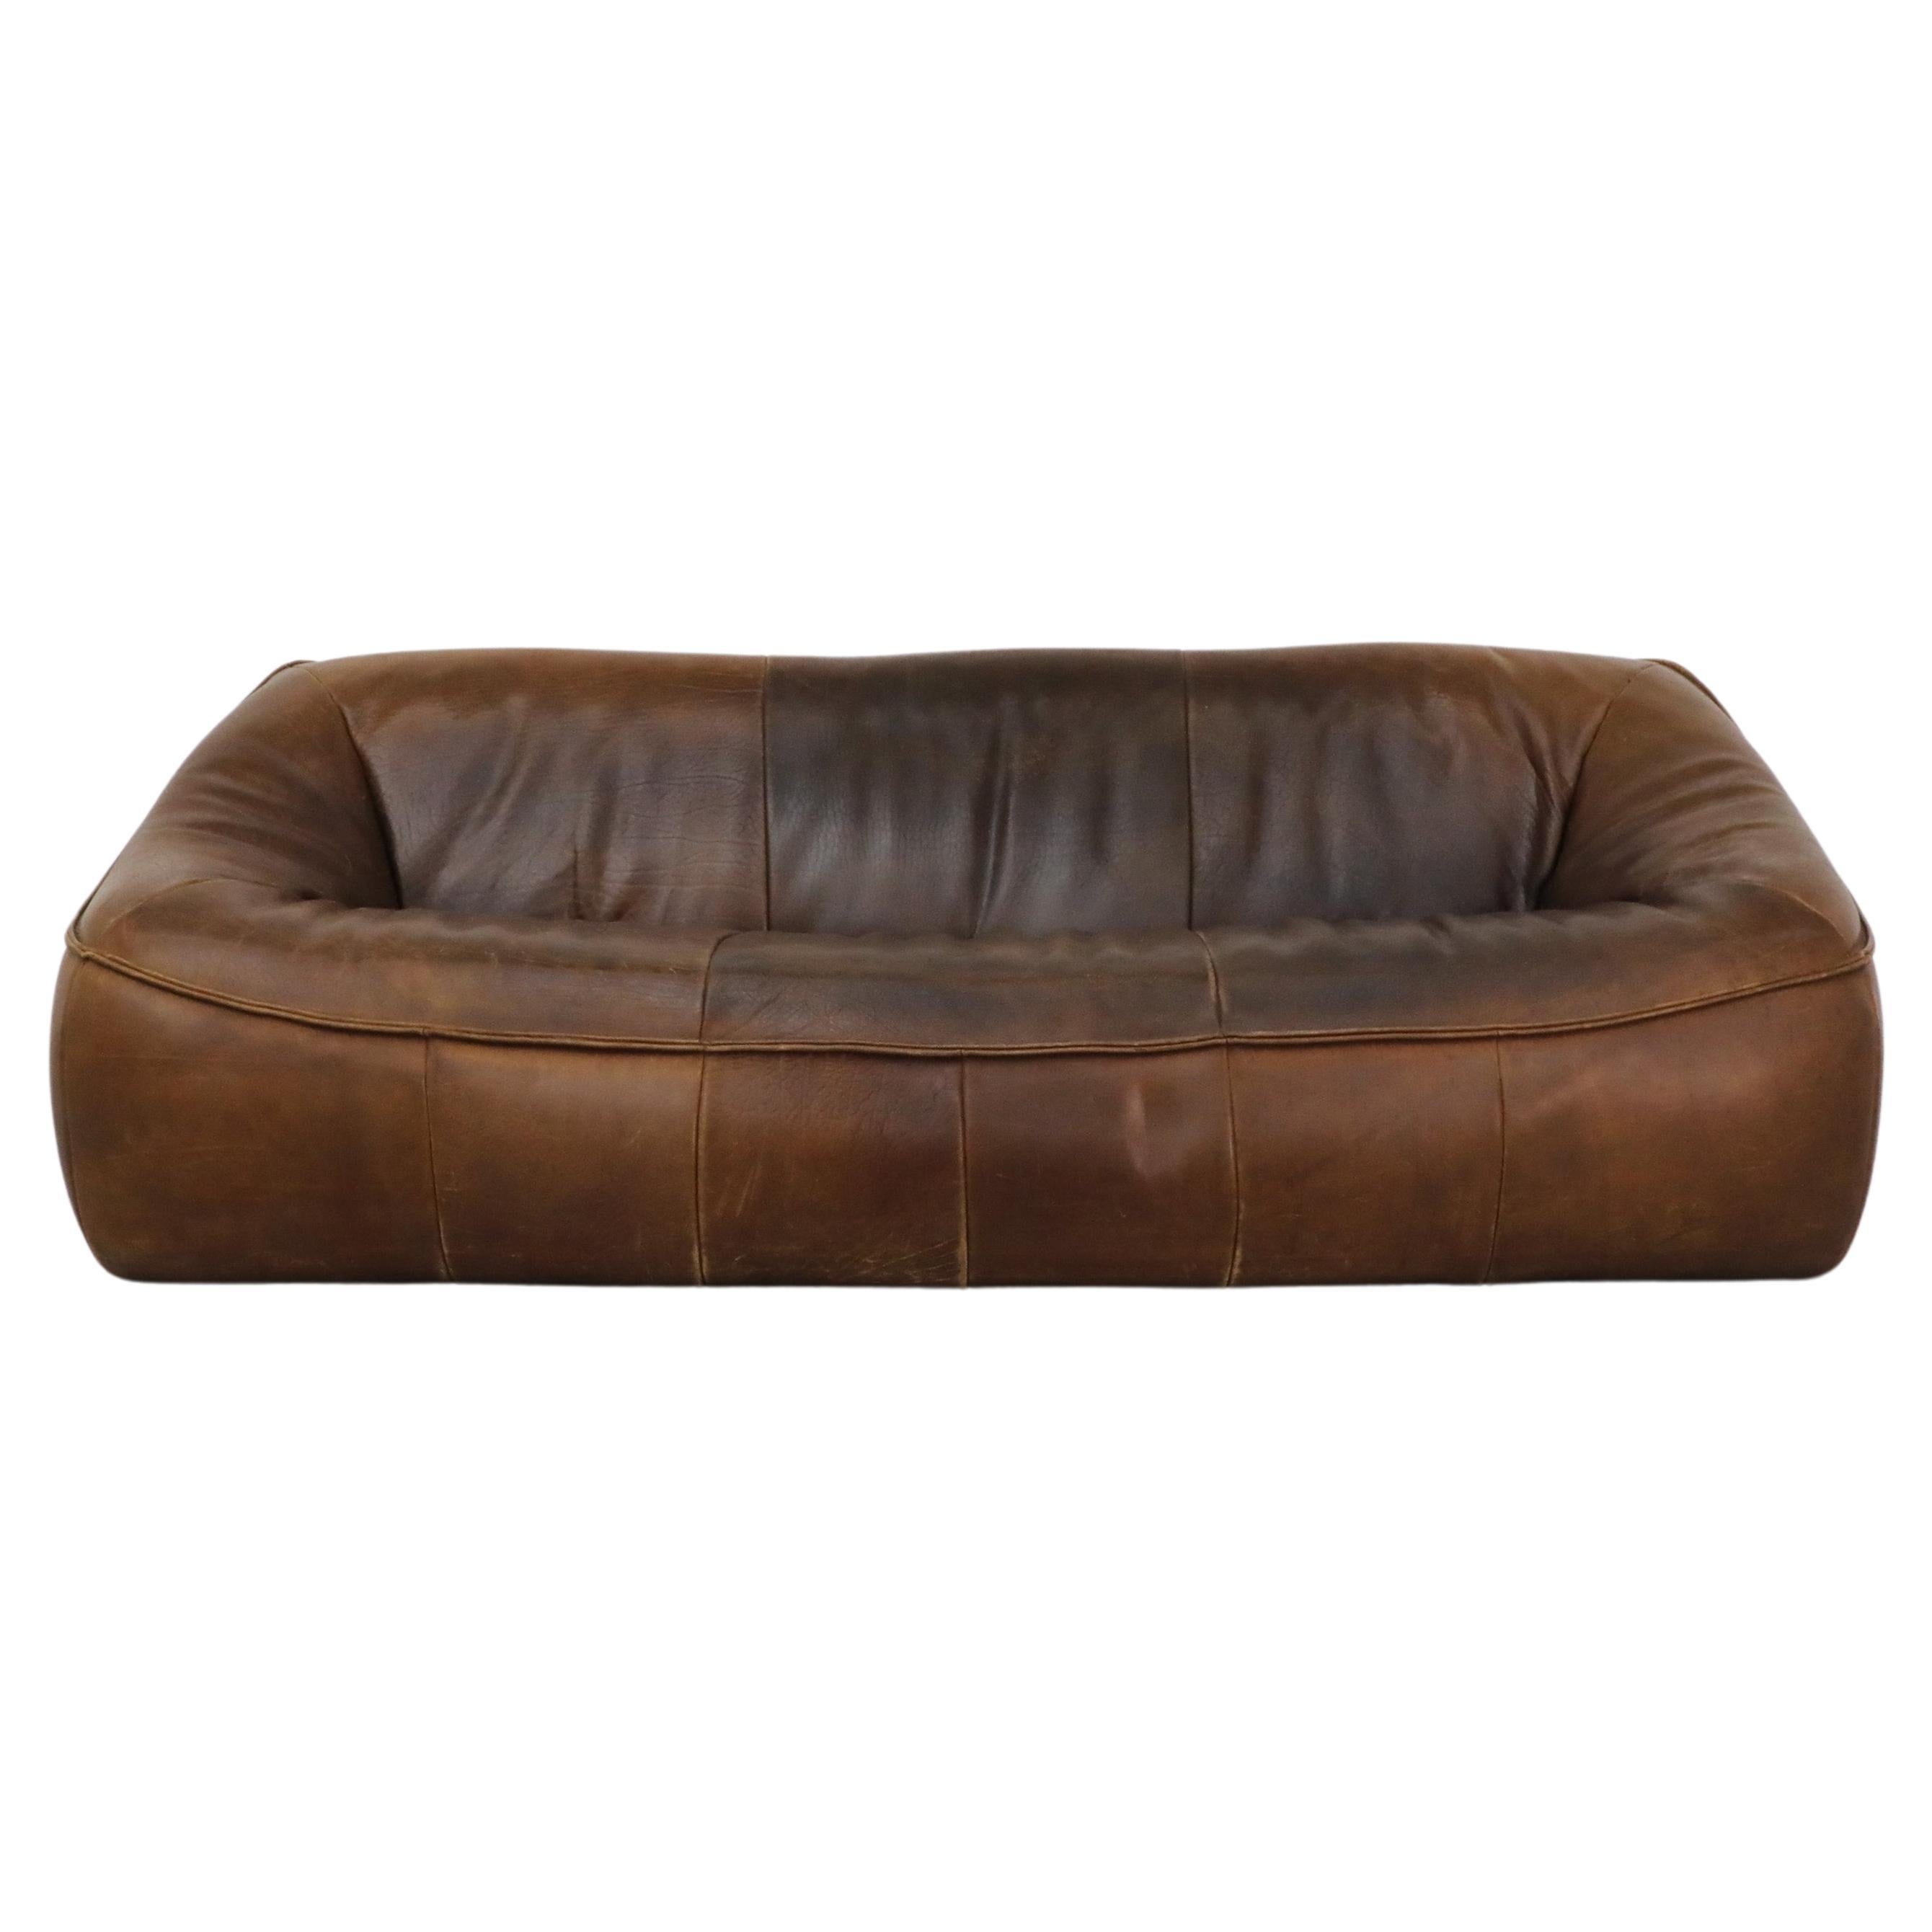 Gerard van den Berg 'Ringo' Three Seater Dark Brown Leather Sofa for Montis